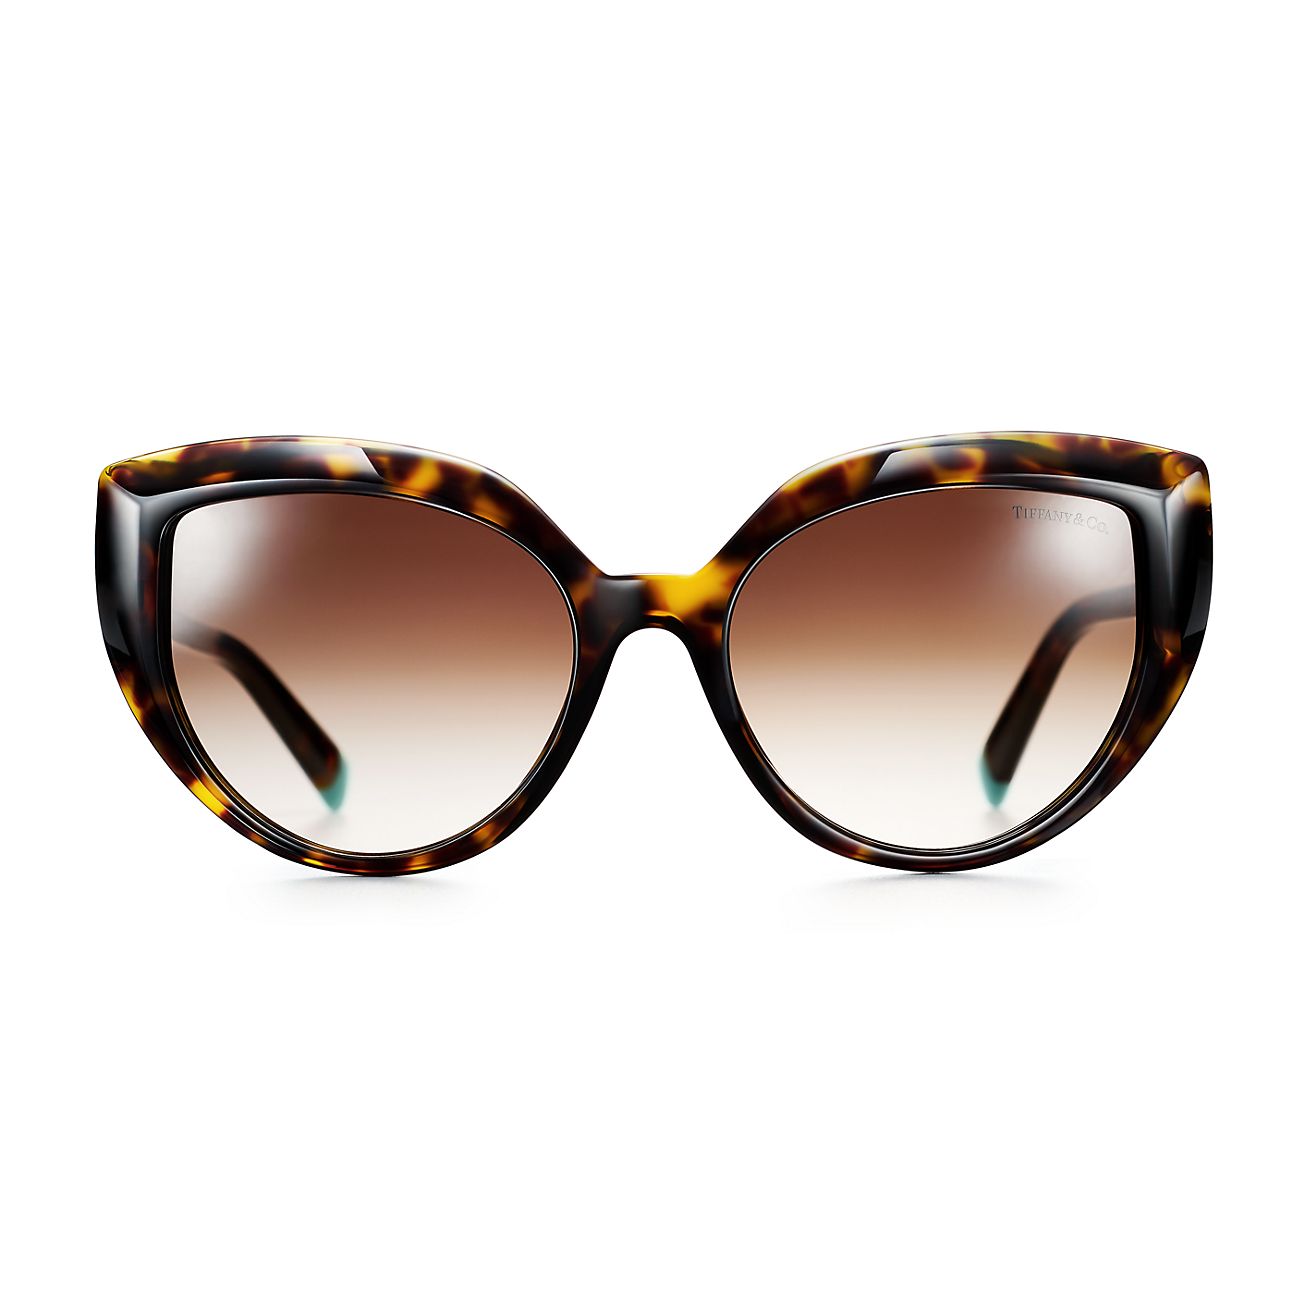 Tiffany T cat eye sunglasses with tortoise acetate. | Tiffany & Co.